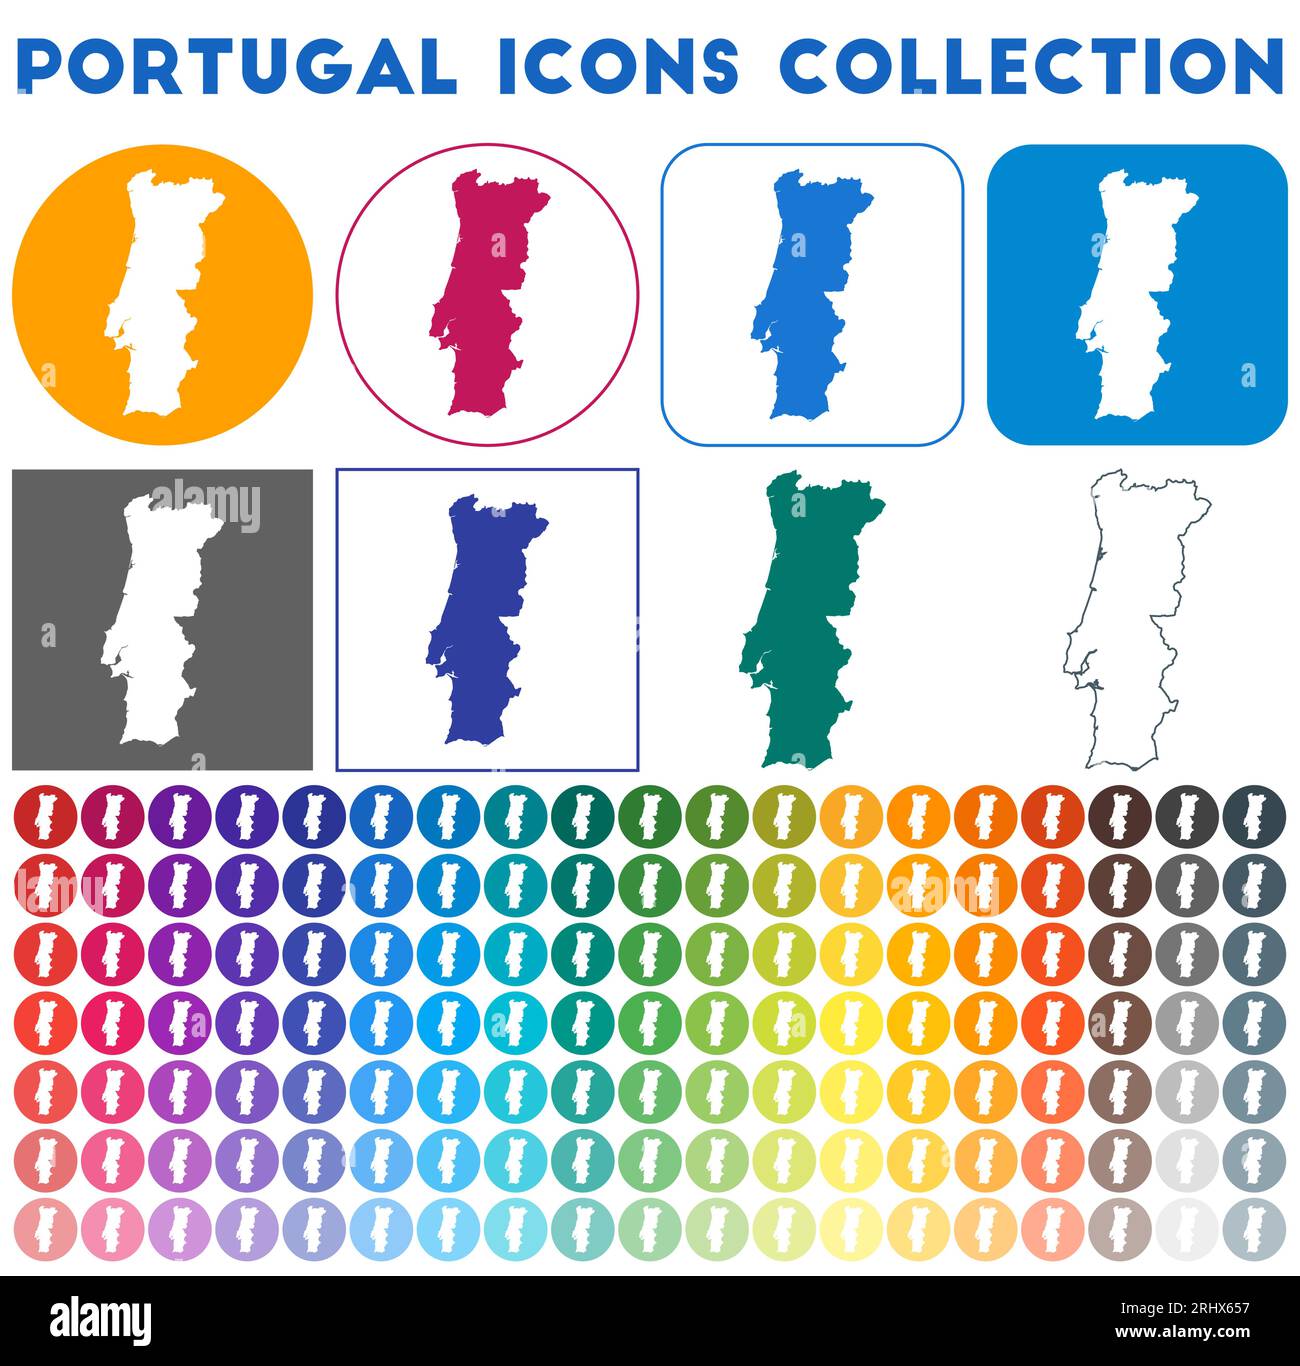 Portugal Icons Kollektion. Farbenfrohe, trendige Kartensymbole. Modernes portugiesisches Abzeichen mit Landkarte. Vektorillustration. Stock Vektor